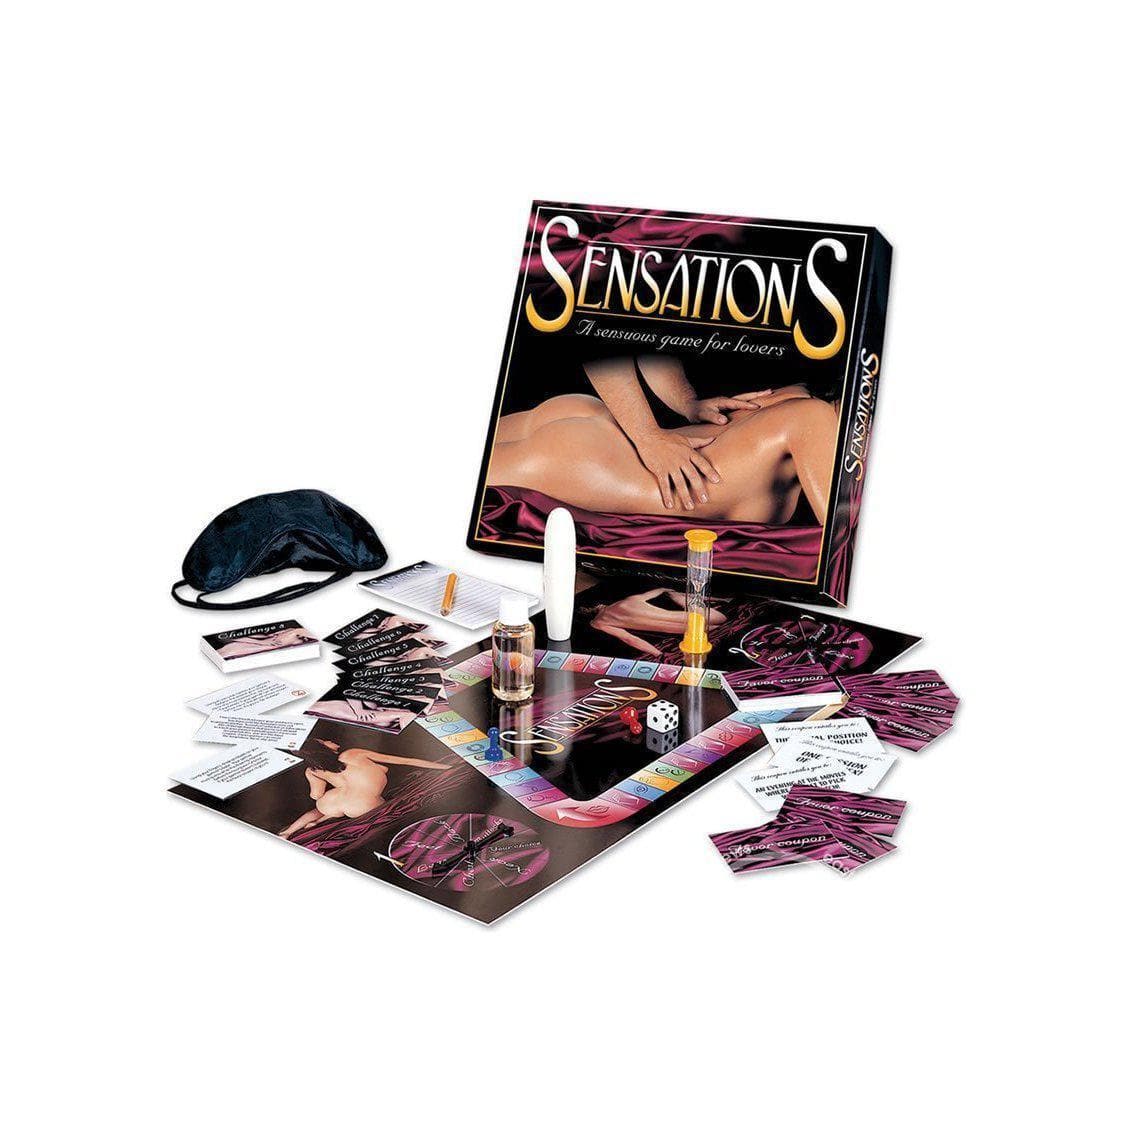 Sensations A Daring Sensuous Game For Lovers Board Game - Romantic Blessings